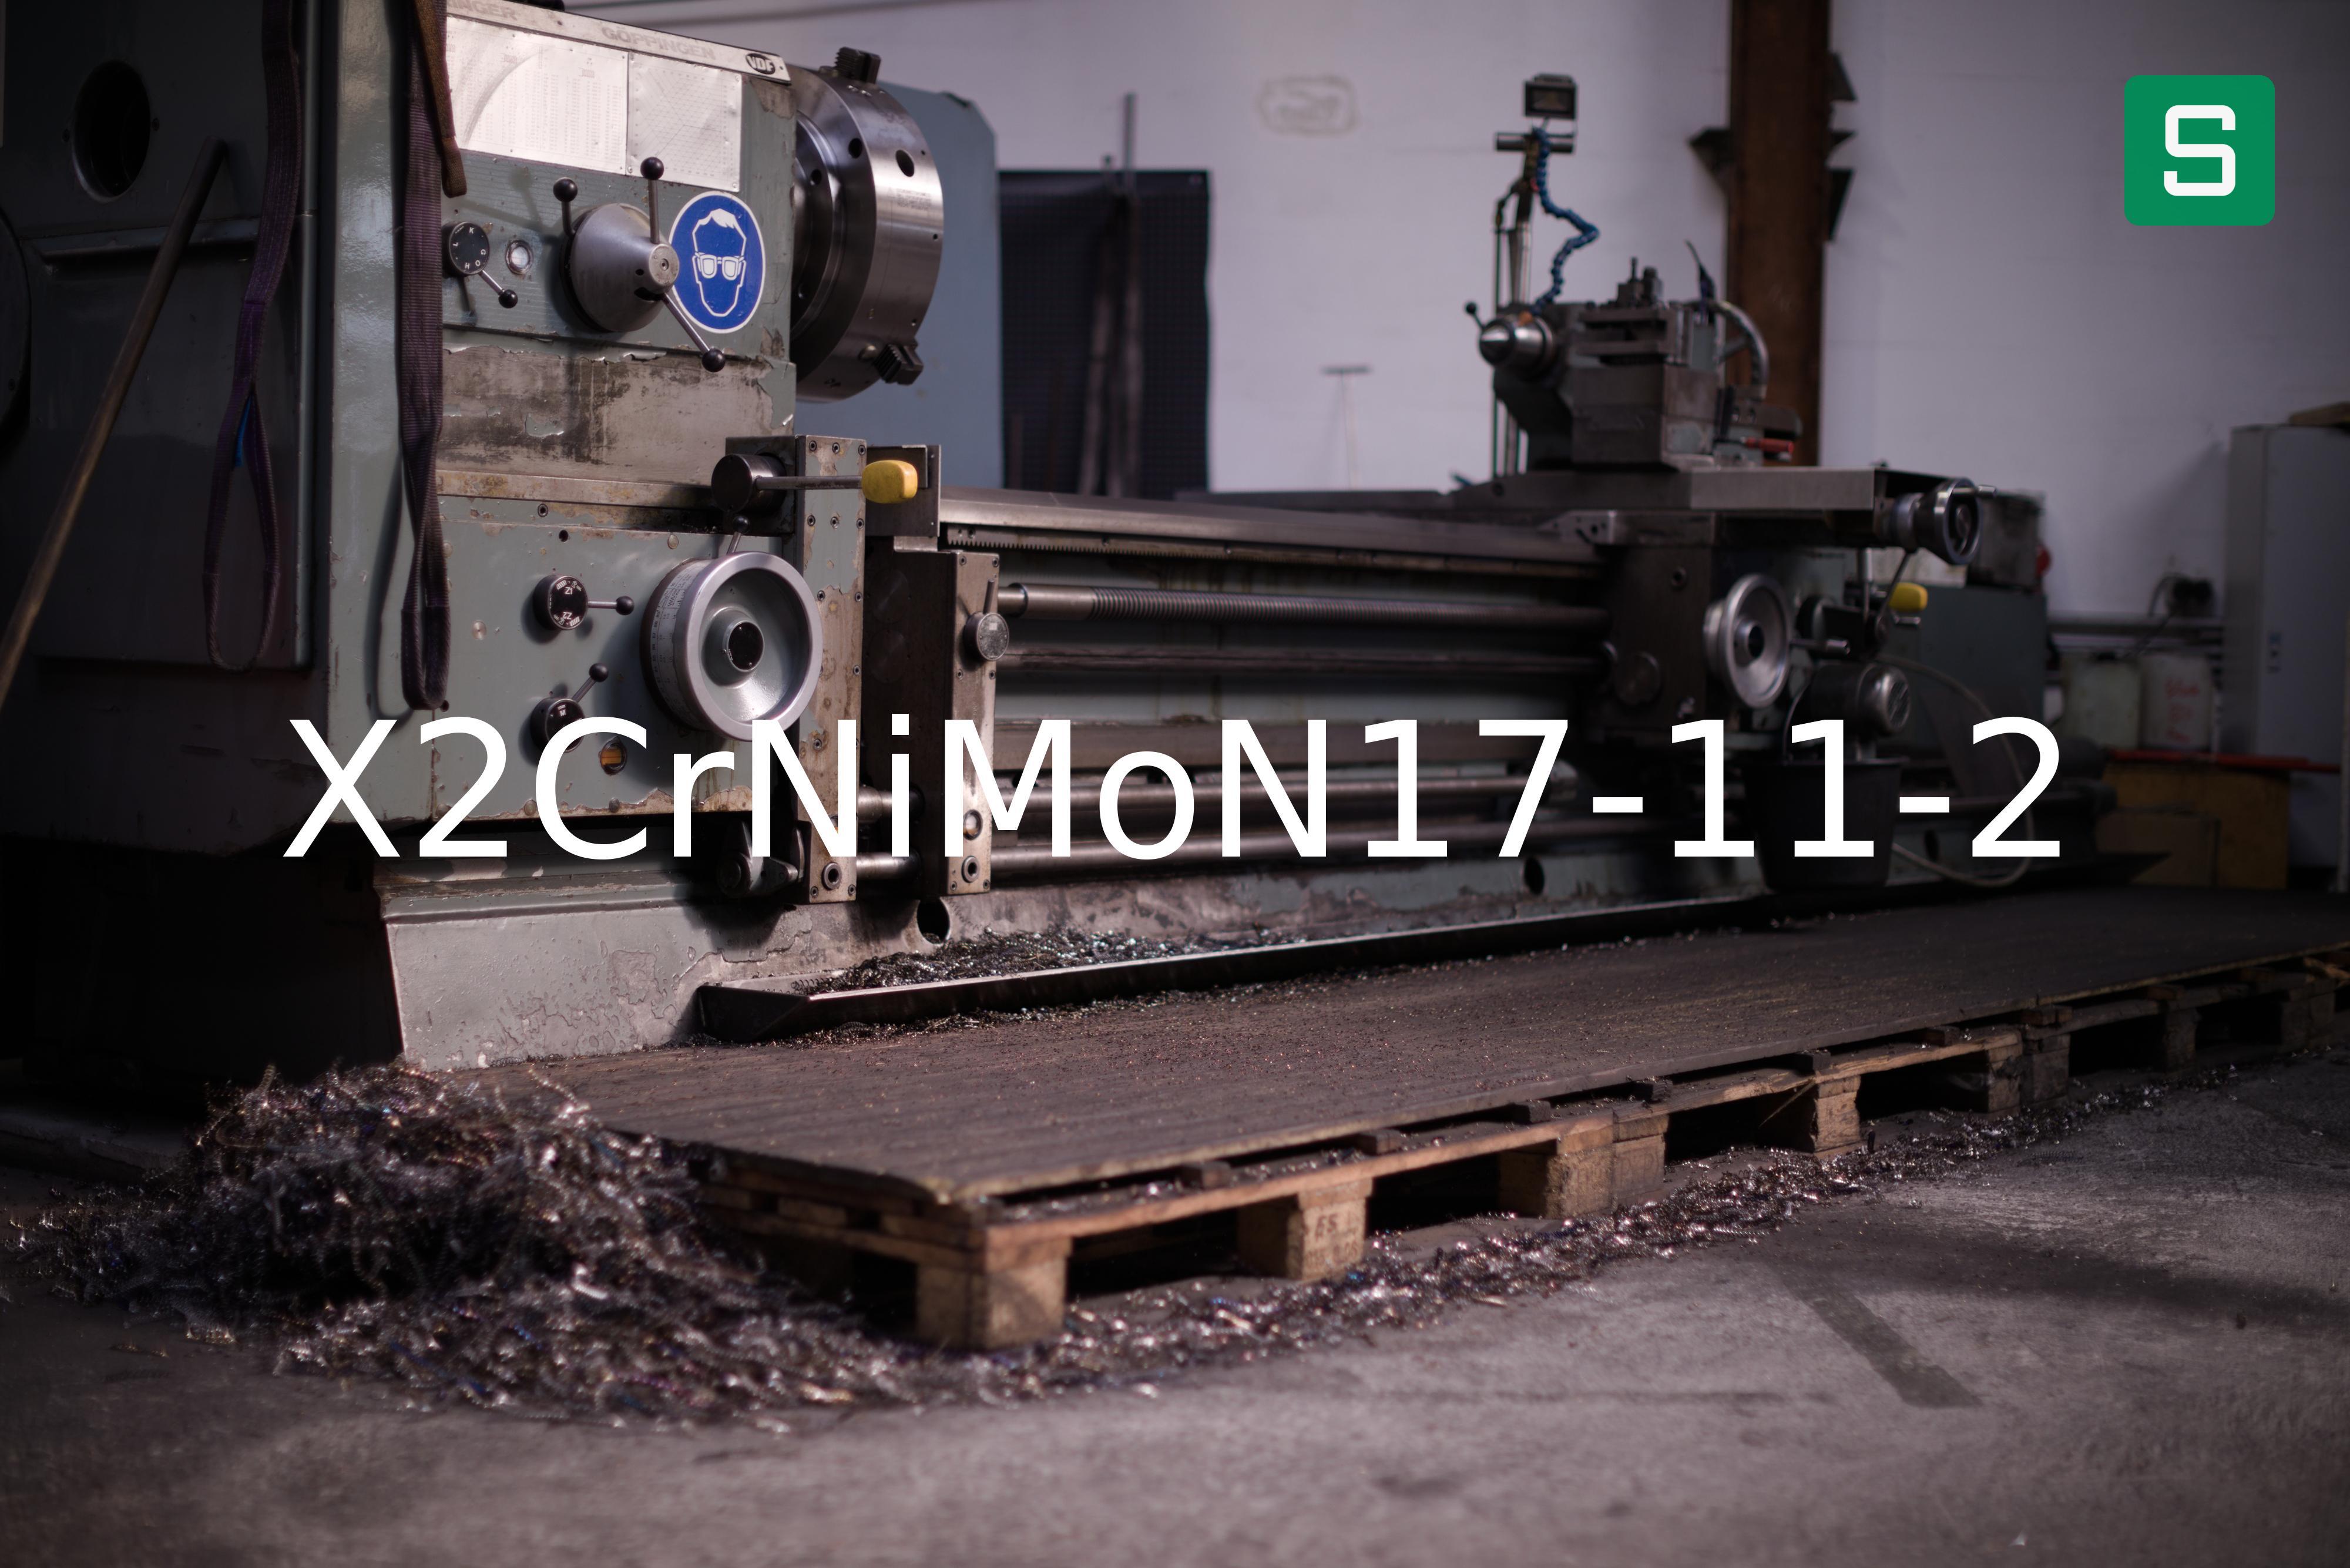 Steel Material: X2CrNiMoN17-11-2